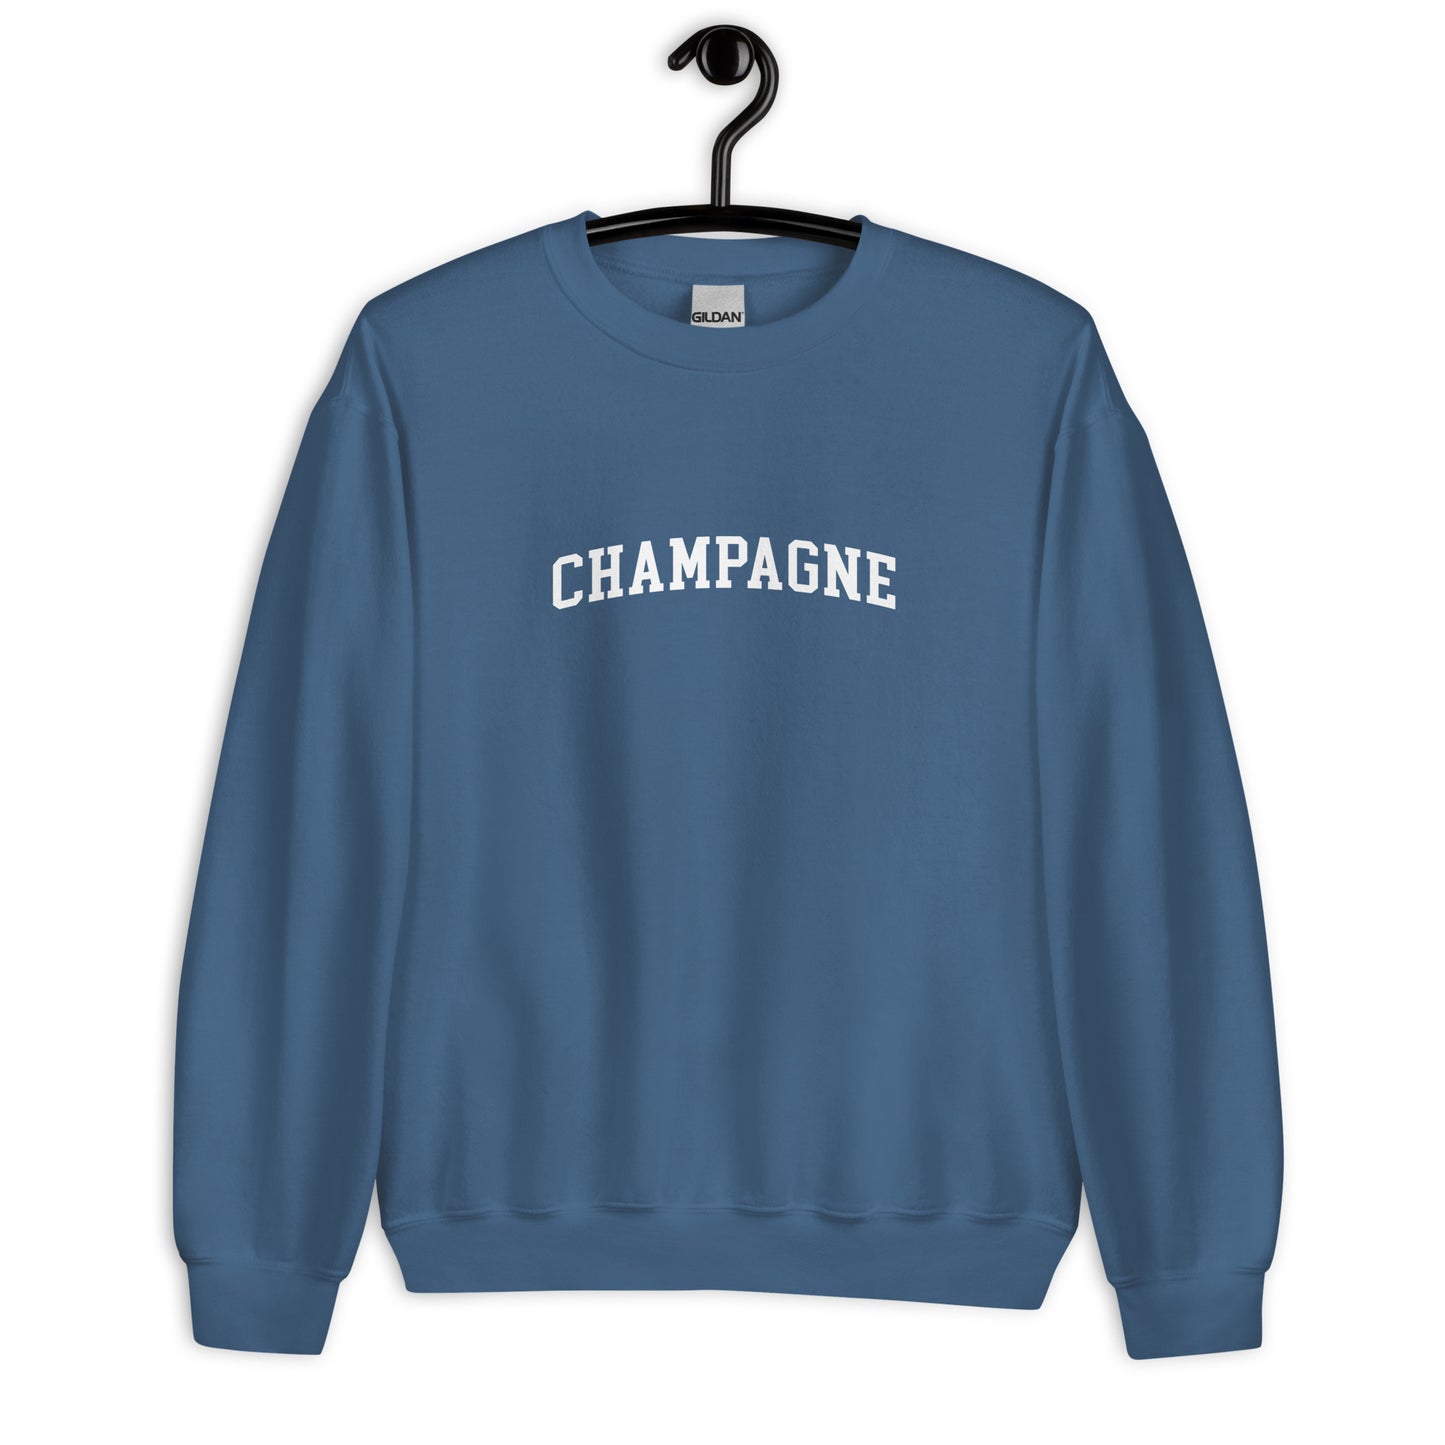 Champagne Sweatshirt - Arched Font